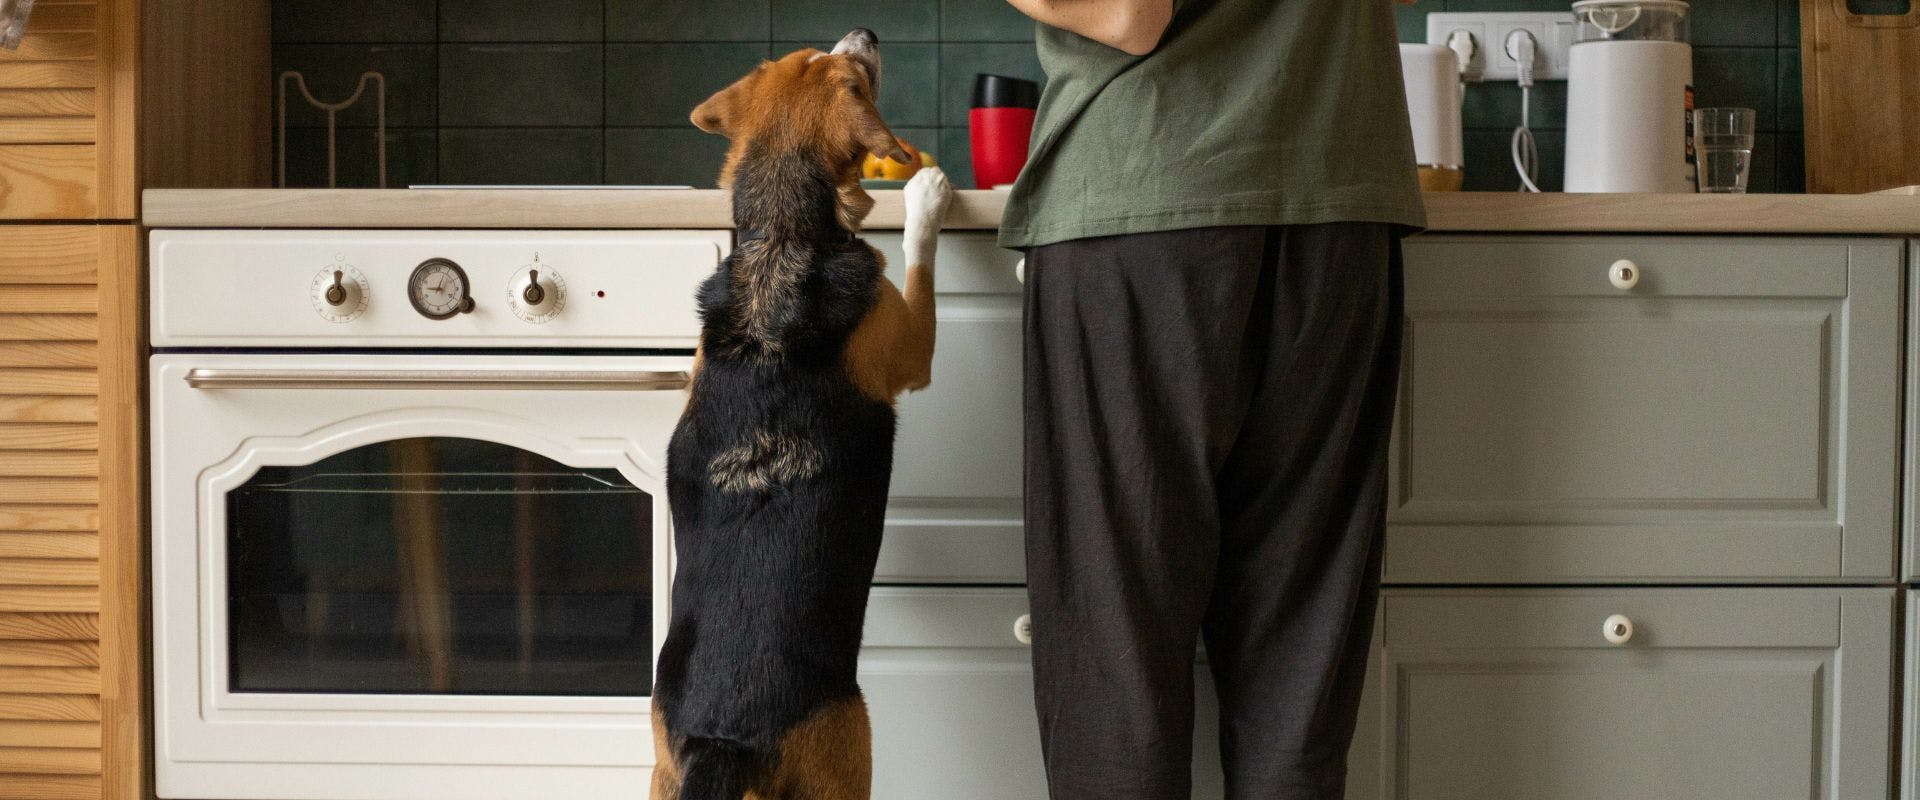 Beagle dog jumping up at kitchen countertop next to owner